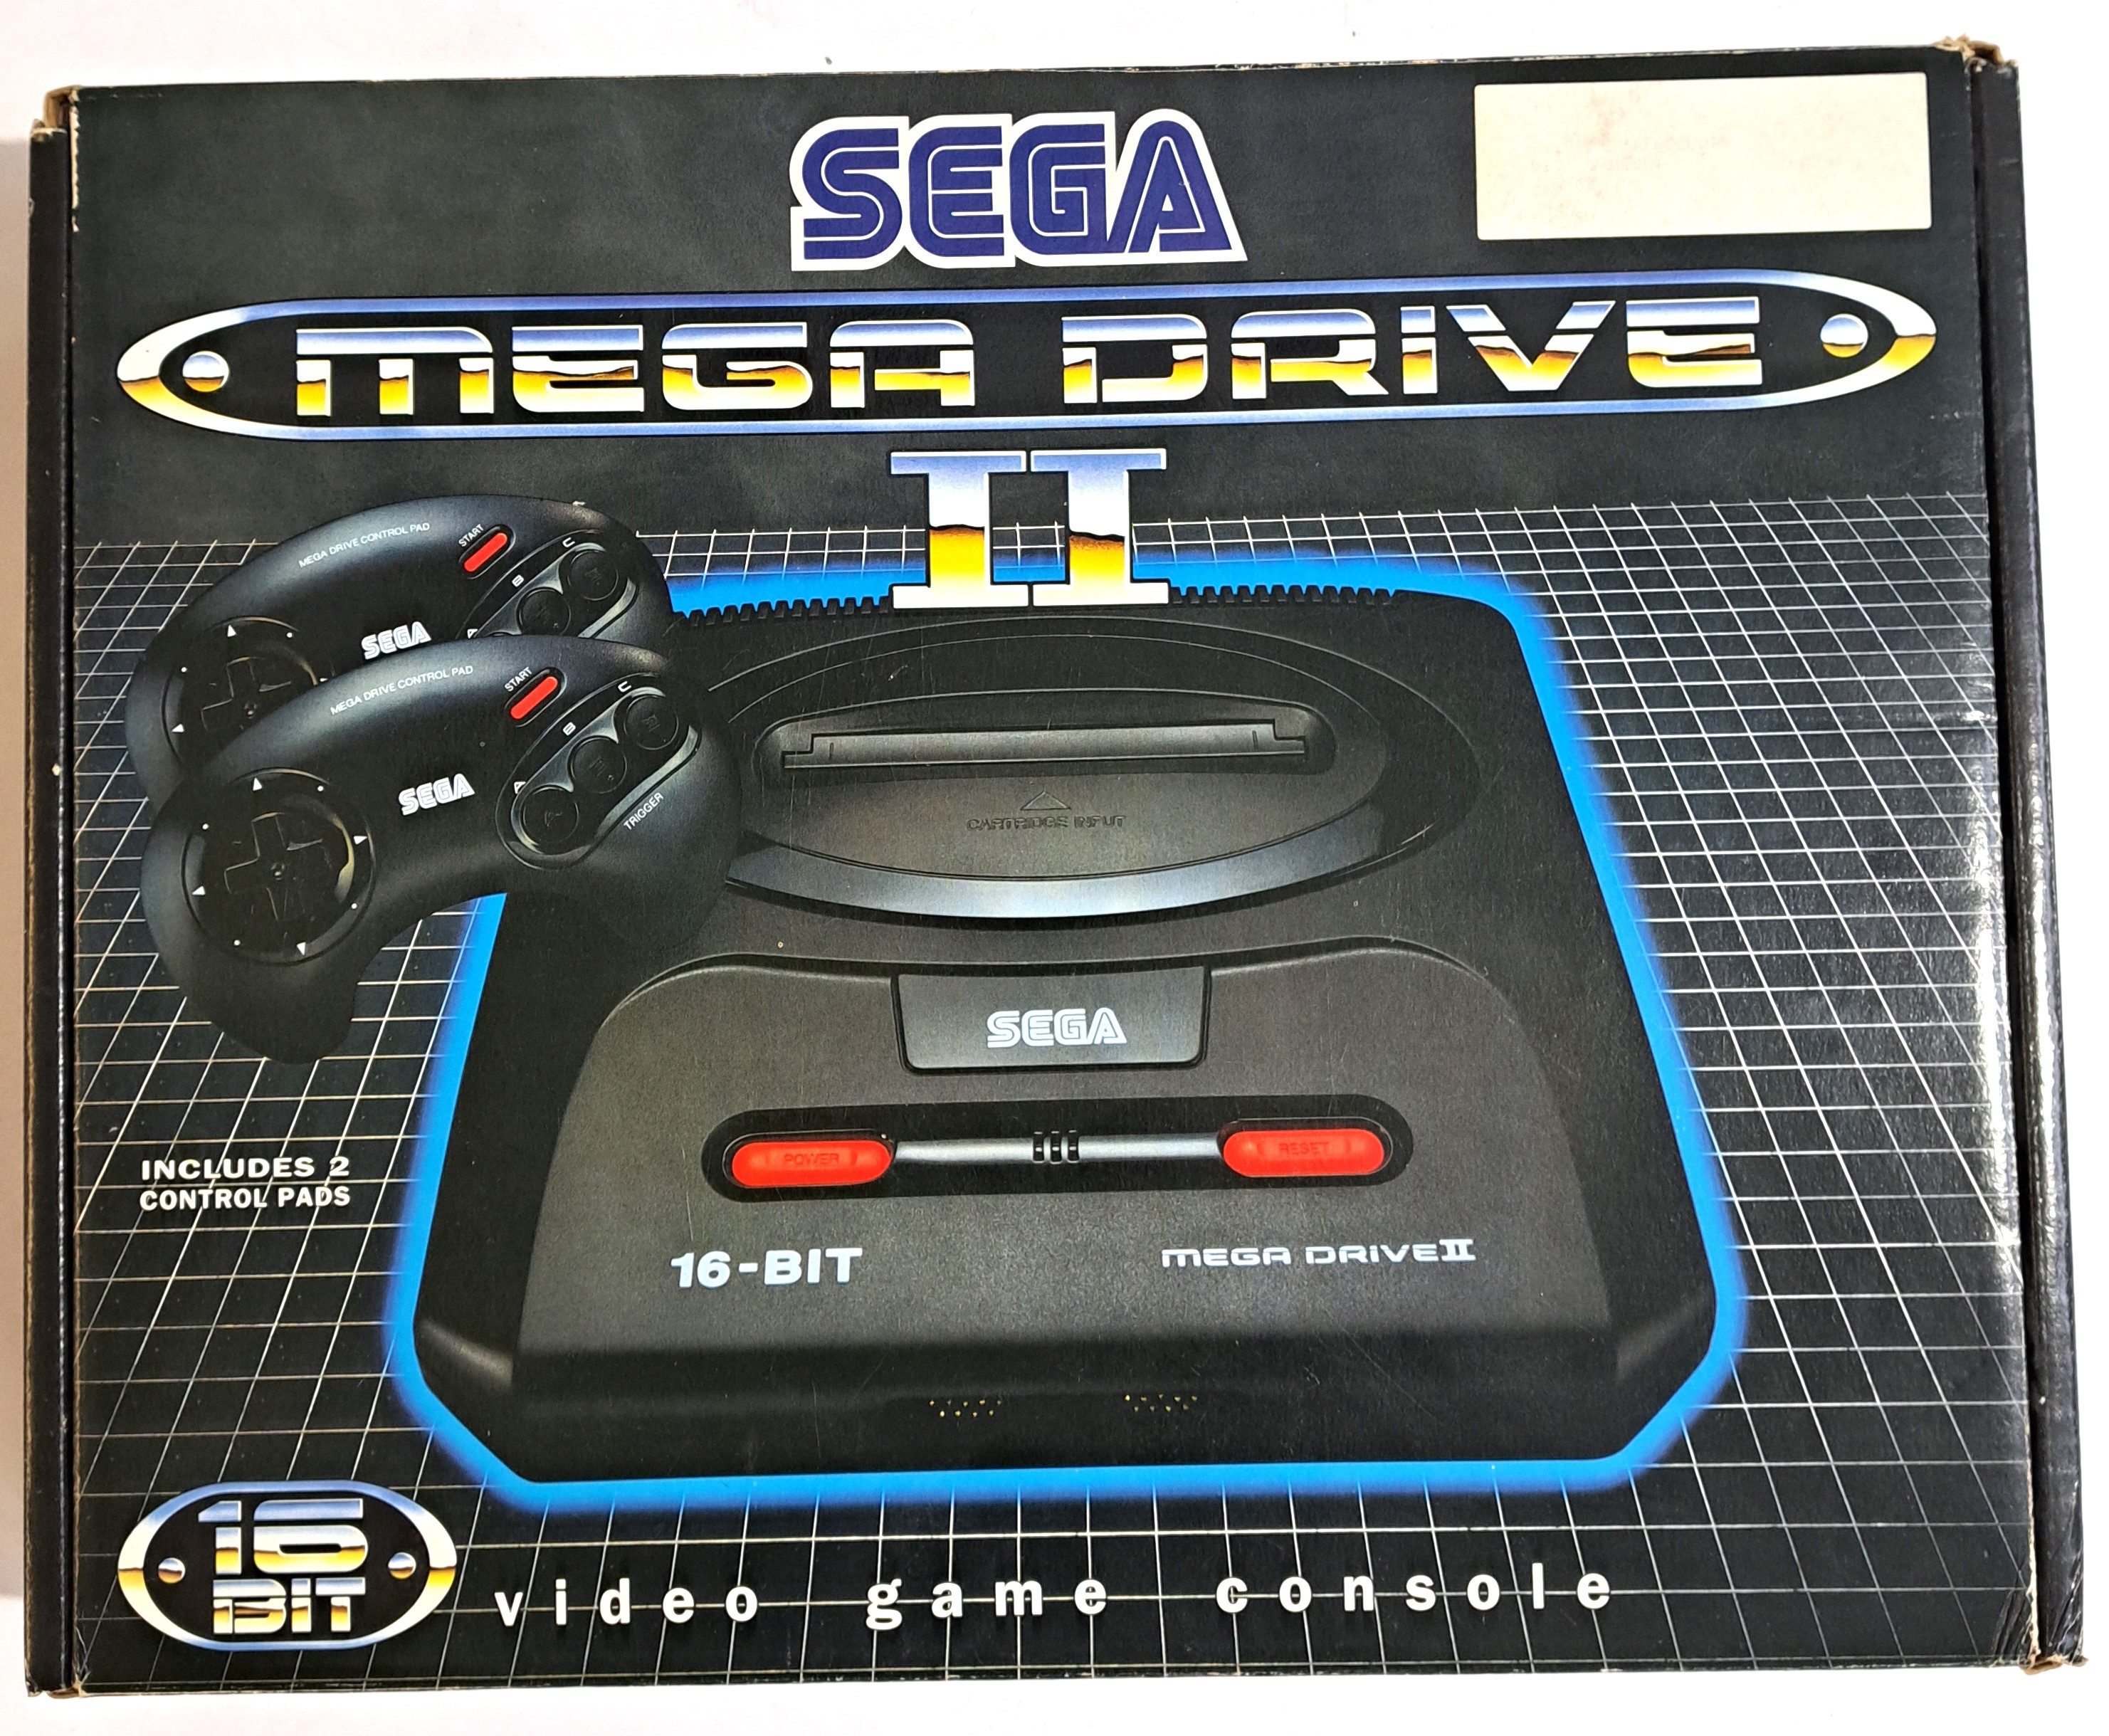 Vintage/Retro Gaming. A boxed SEGA Mega Drive II Gaming Set - Image 2 of 2